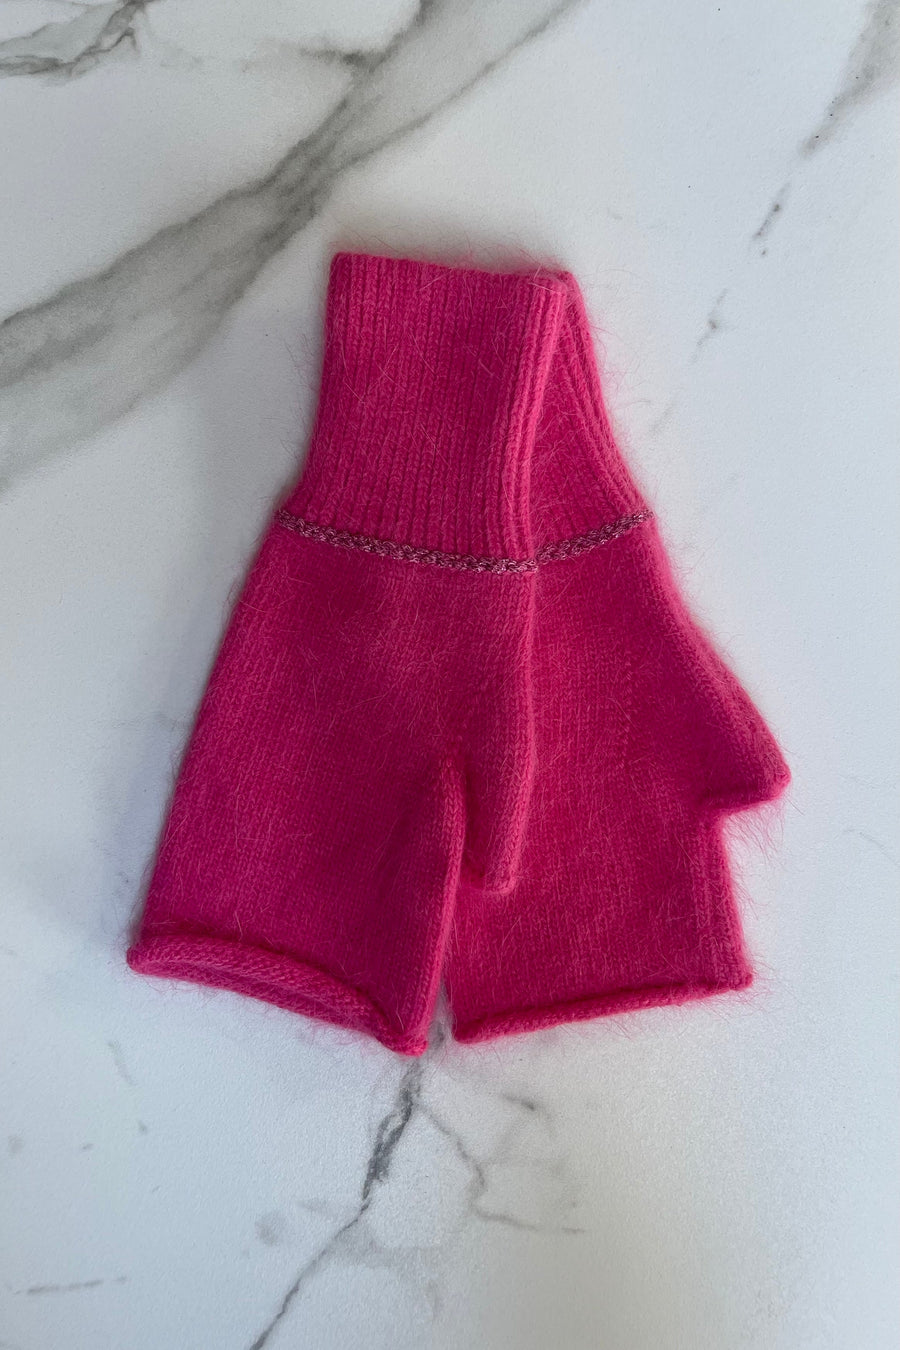 Pink cashmere mittens, fingerless gloves 